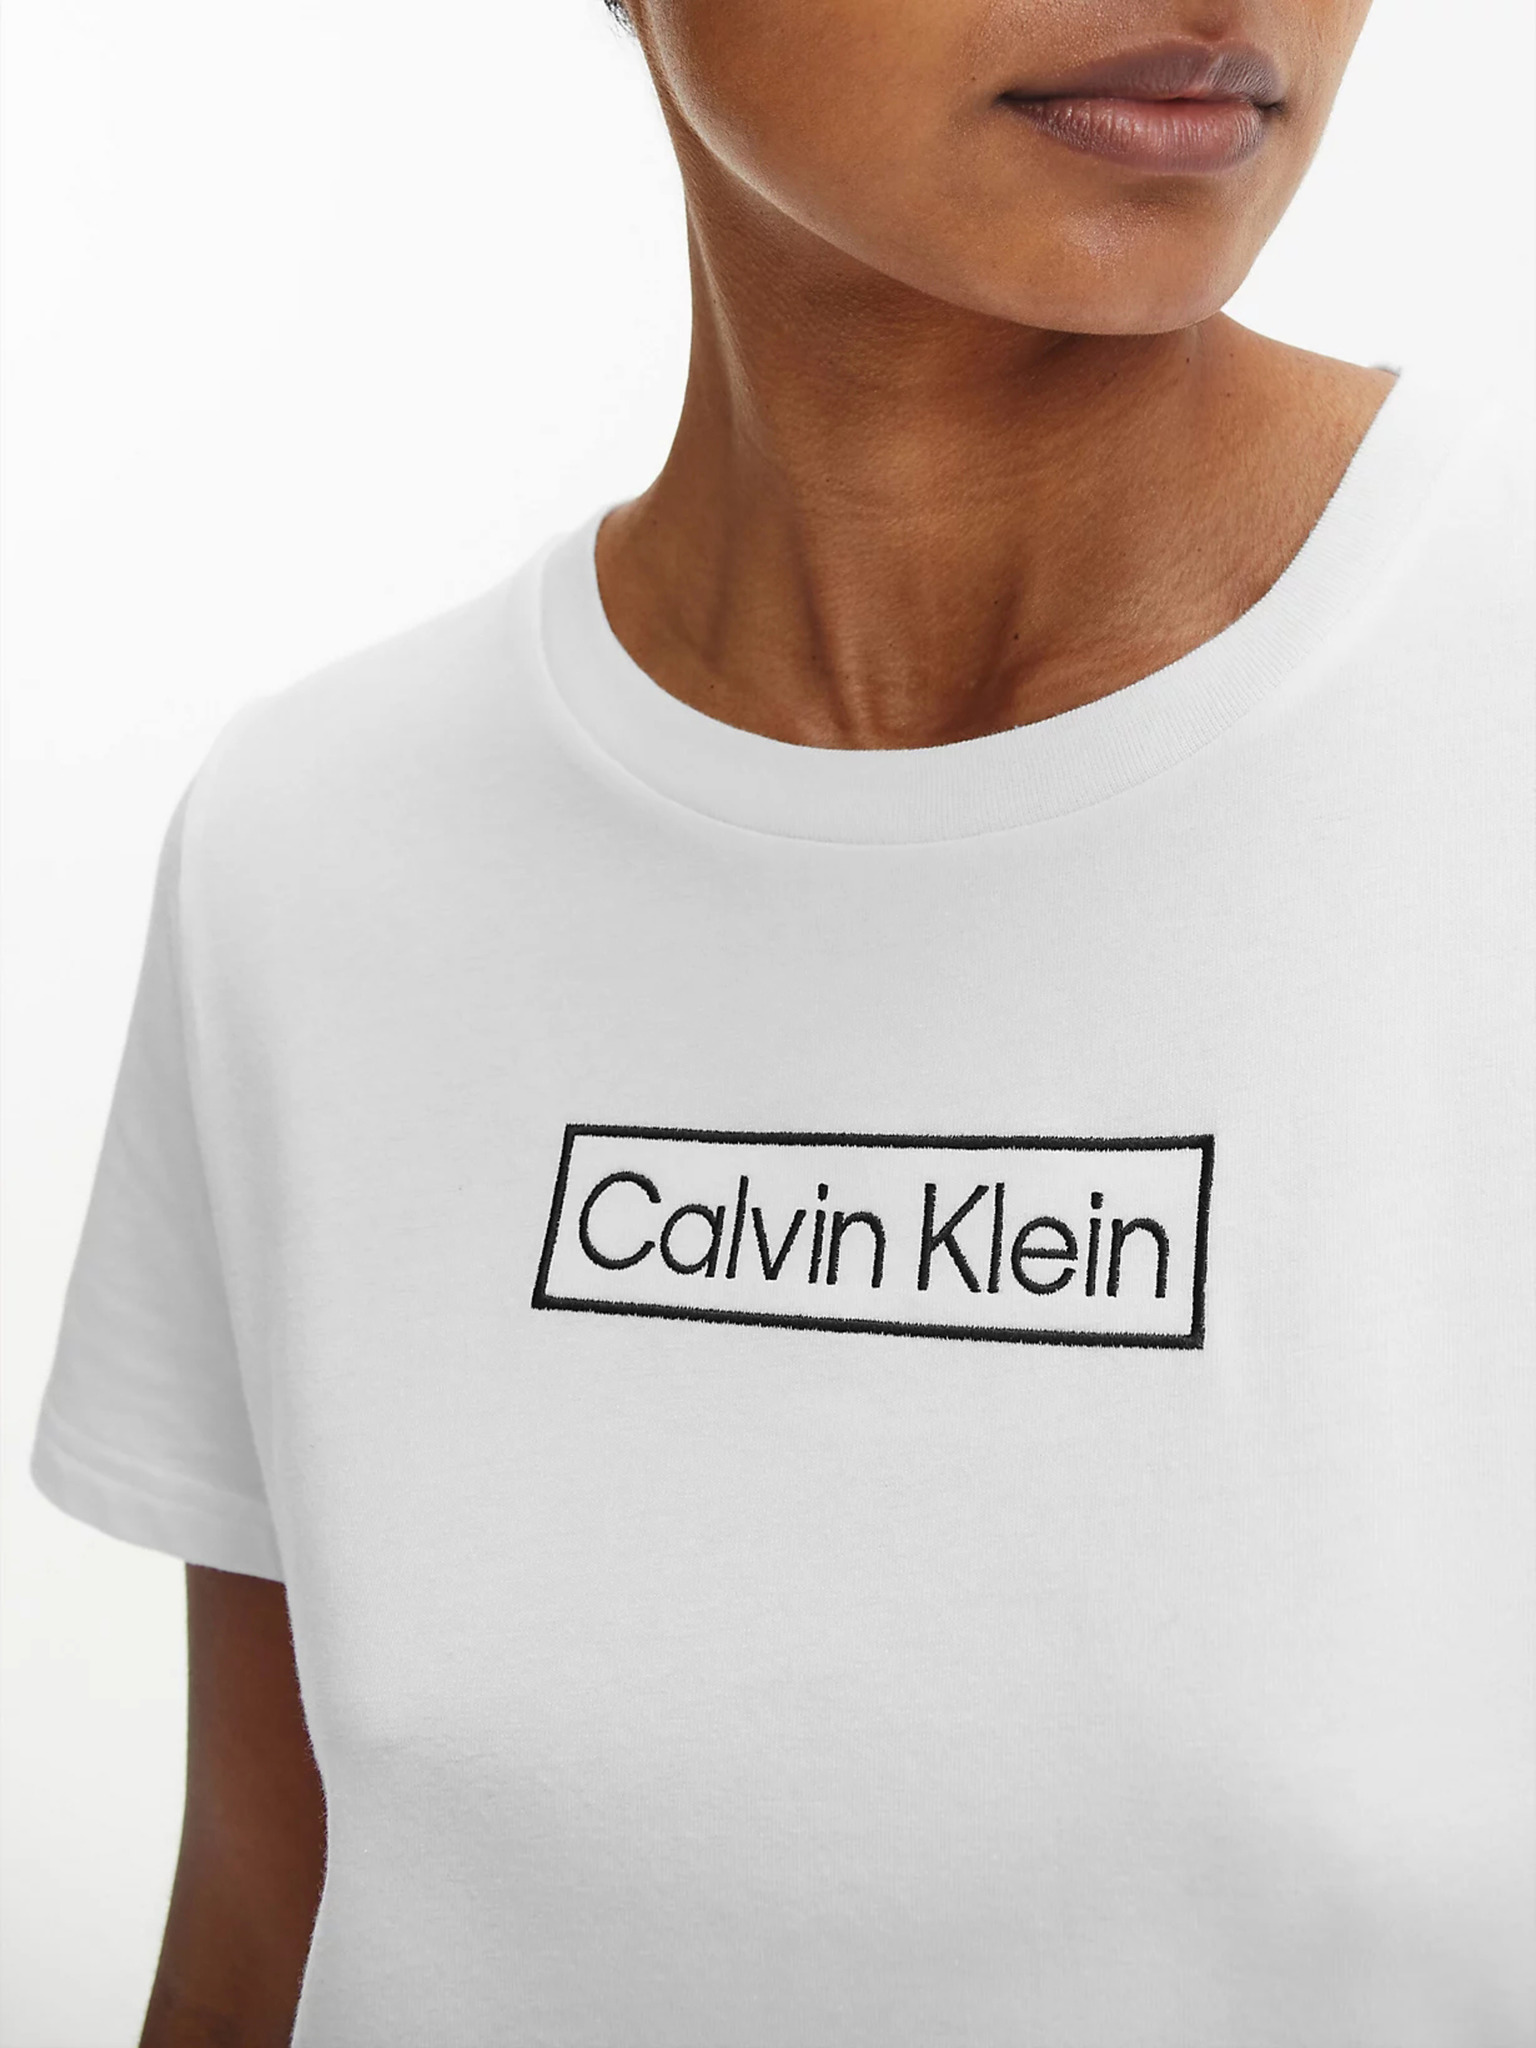 Calvin Klein - T-shirt for sleeping